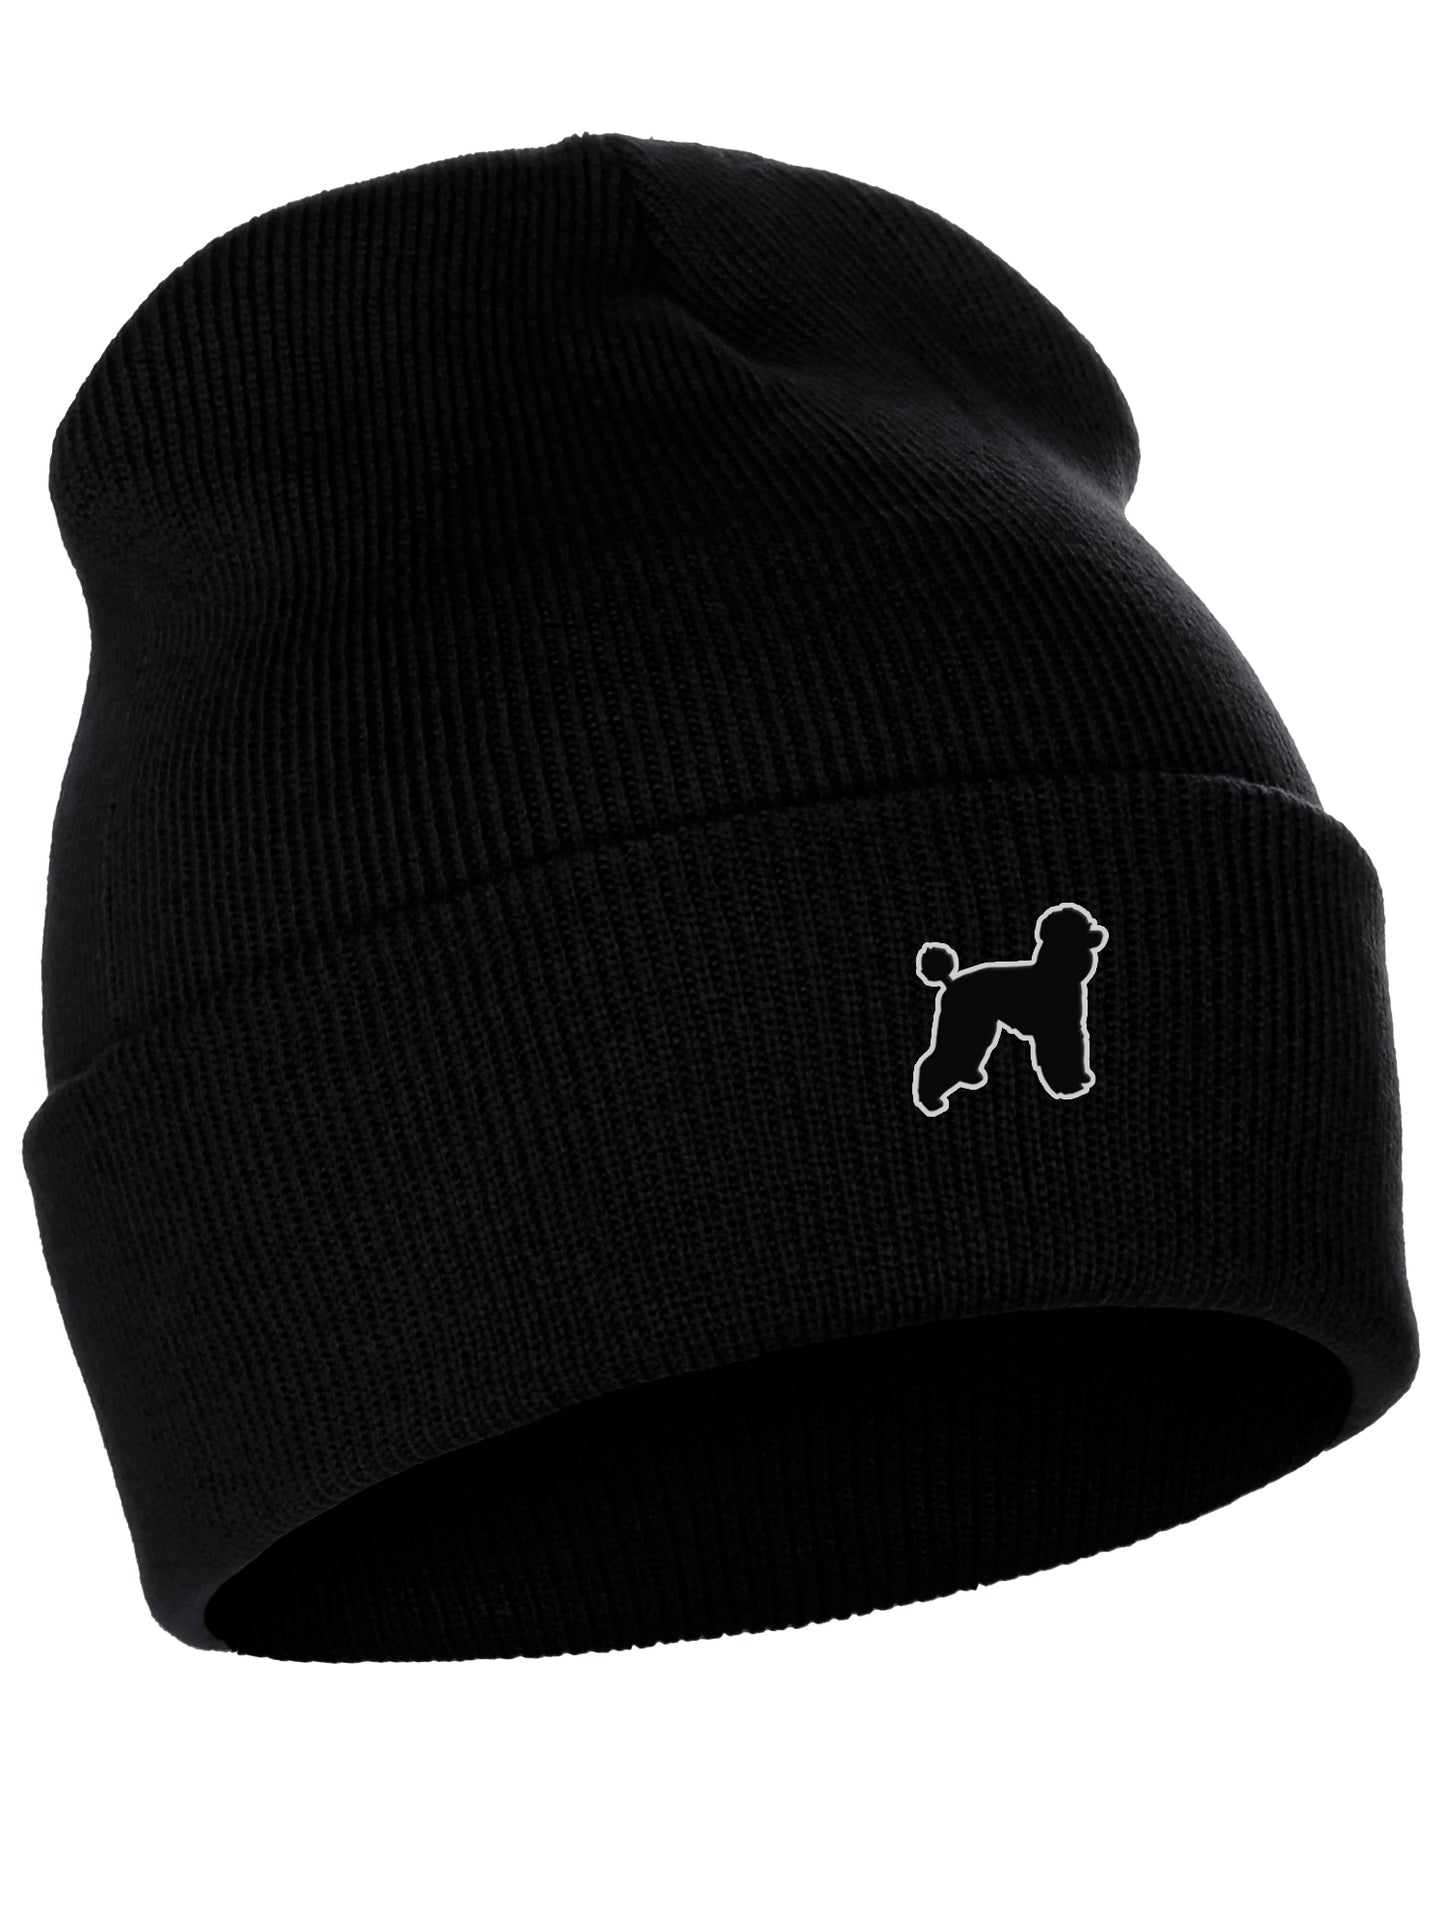 Daxton Dog Breeds Cuffed Beanie Winter Knit Hat Skully Cap